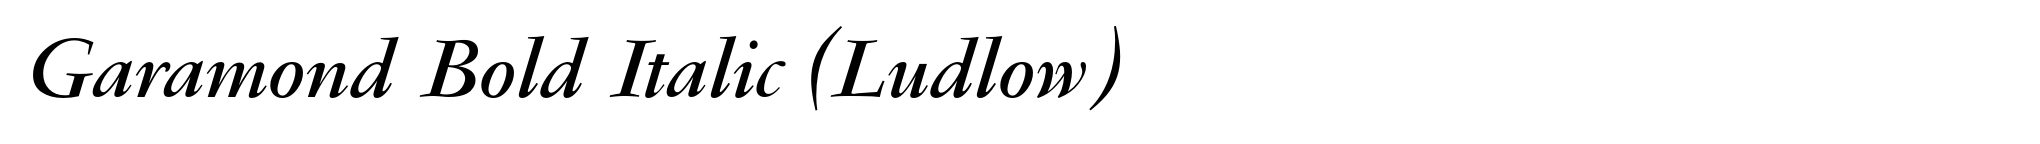 Garamond Bold Italic (Ludlow) image